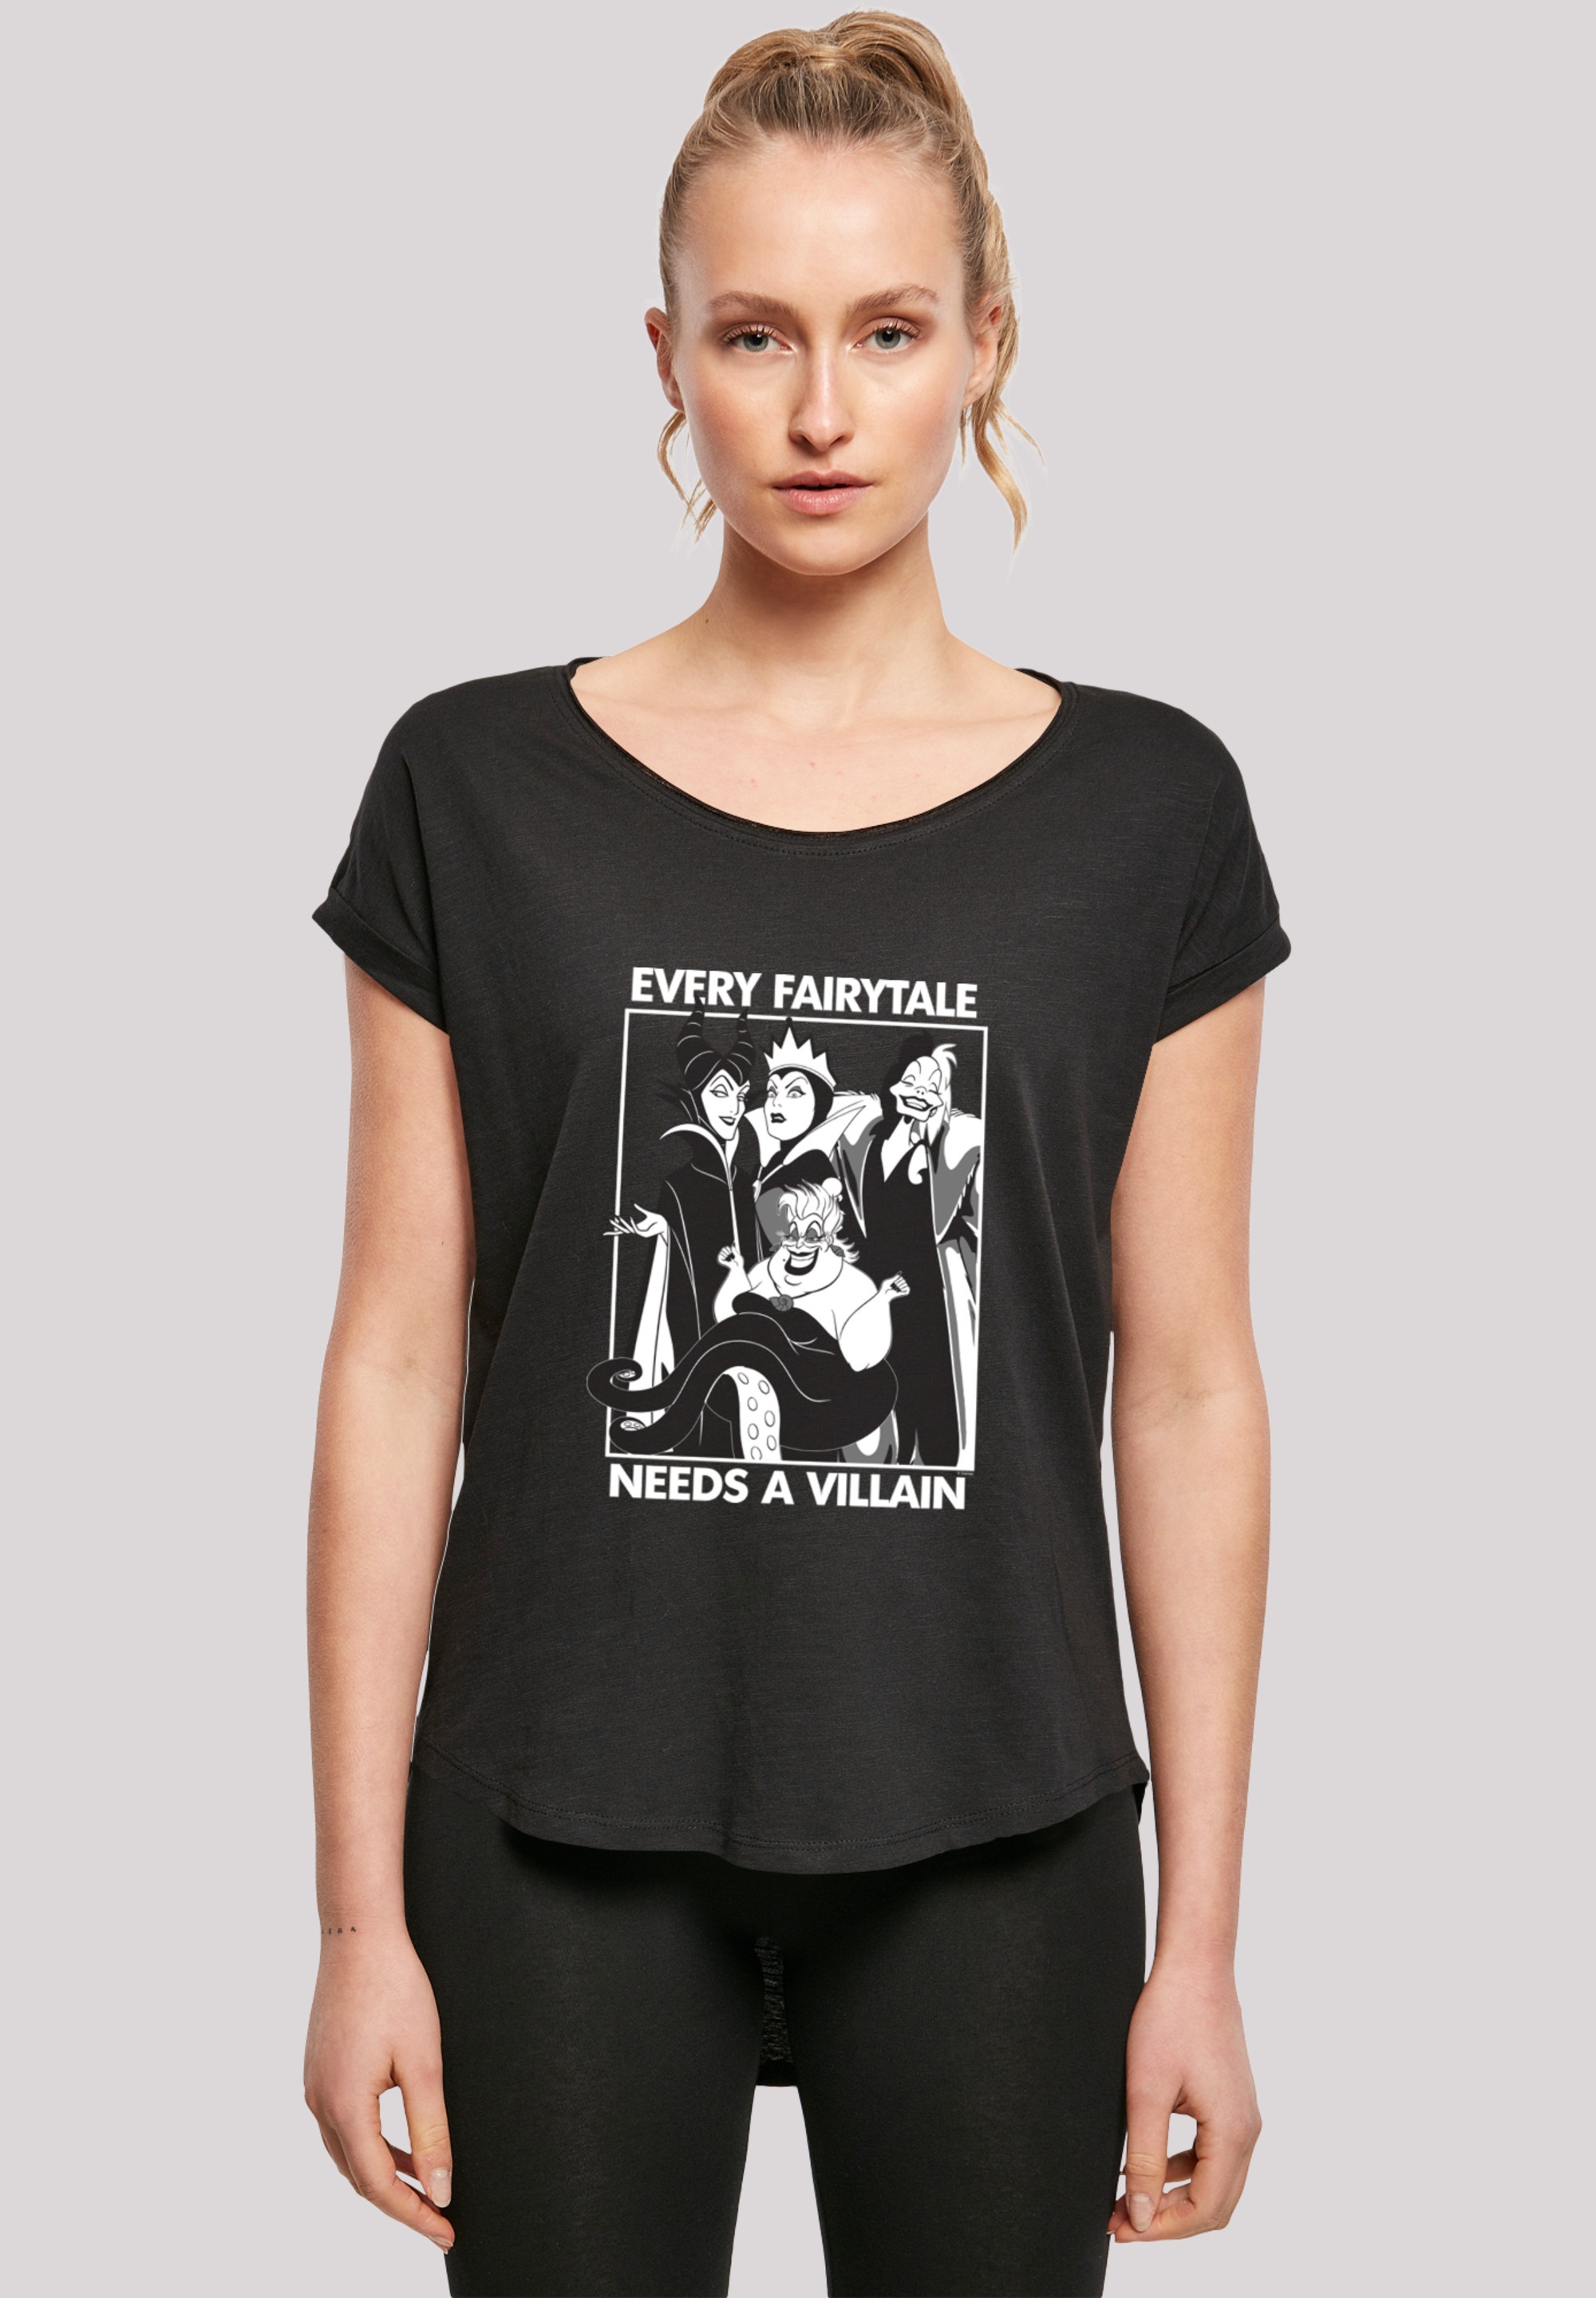 A Fairy Print T-Shirt | »Every kaufen Villain«, F4NT4STIC Tale BAUR Needs für